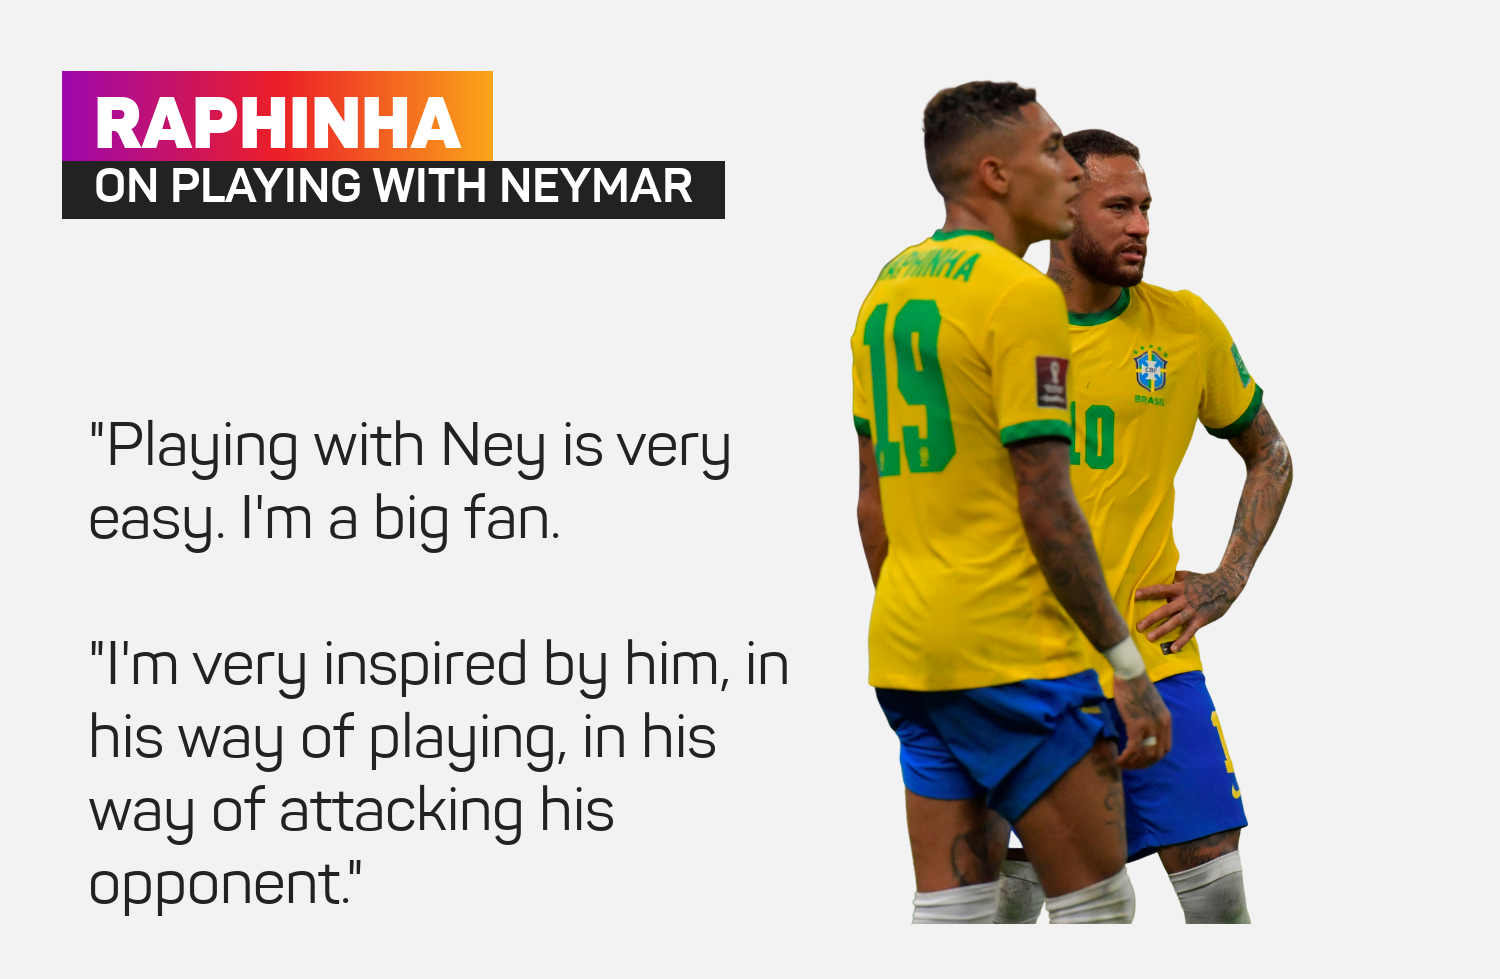 Raphinha and Neymar